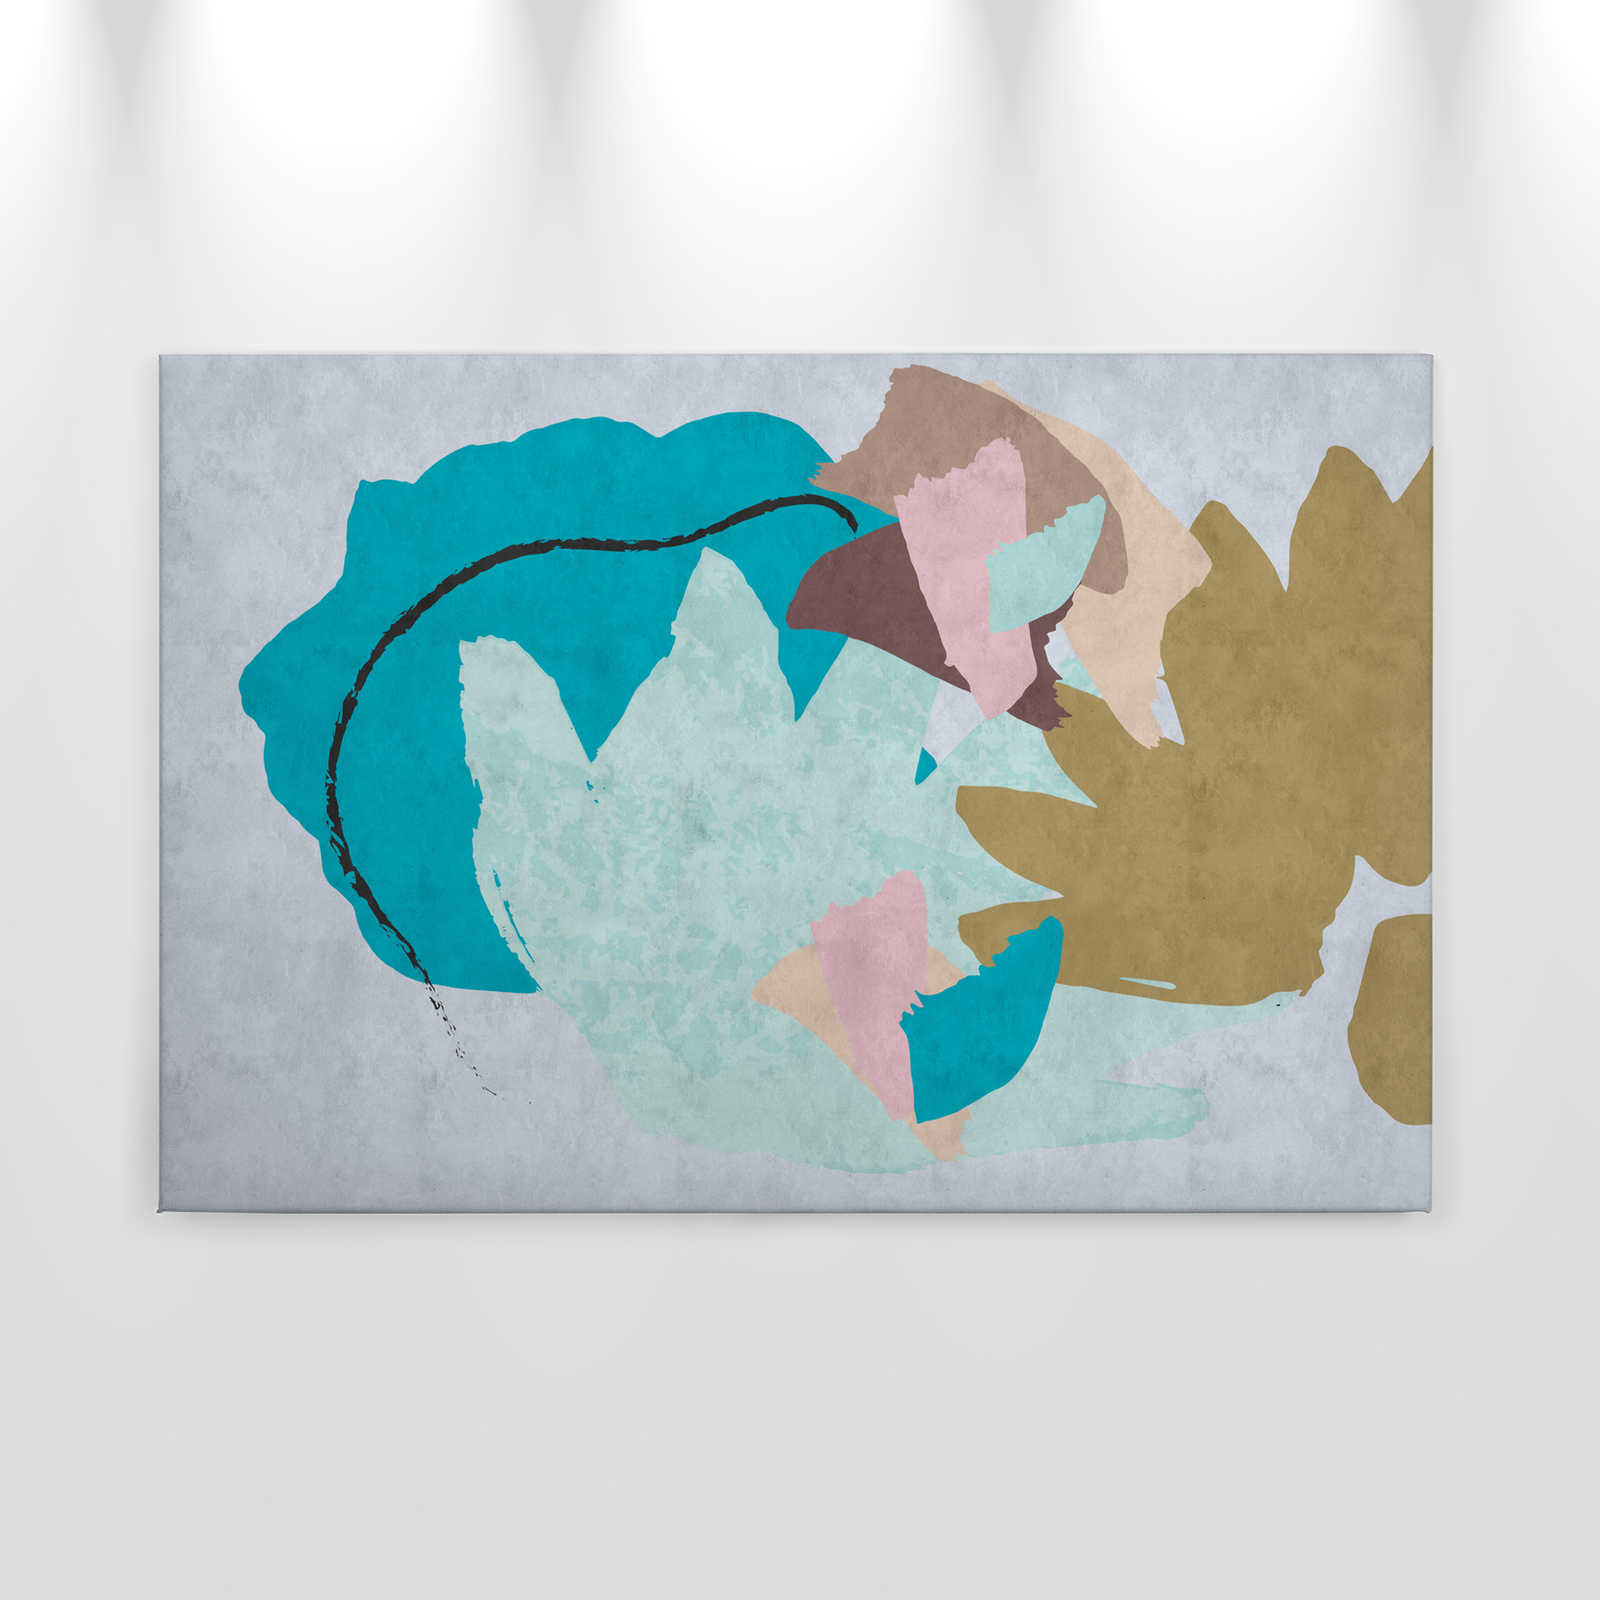             Collage floreale 1 - Pittura astratta su tela, arte colorata - Texture carta assorbente - 0,90 m x 0,60 m
        